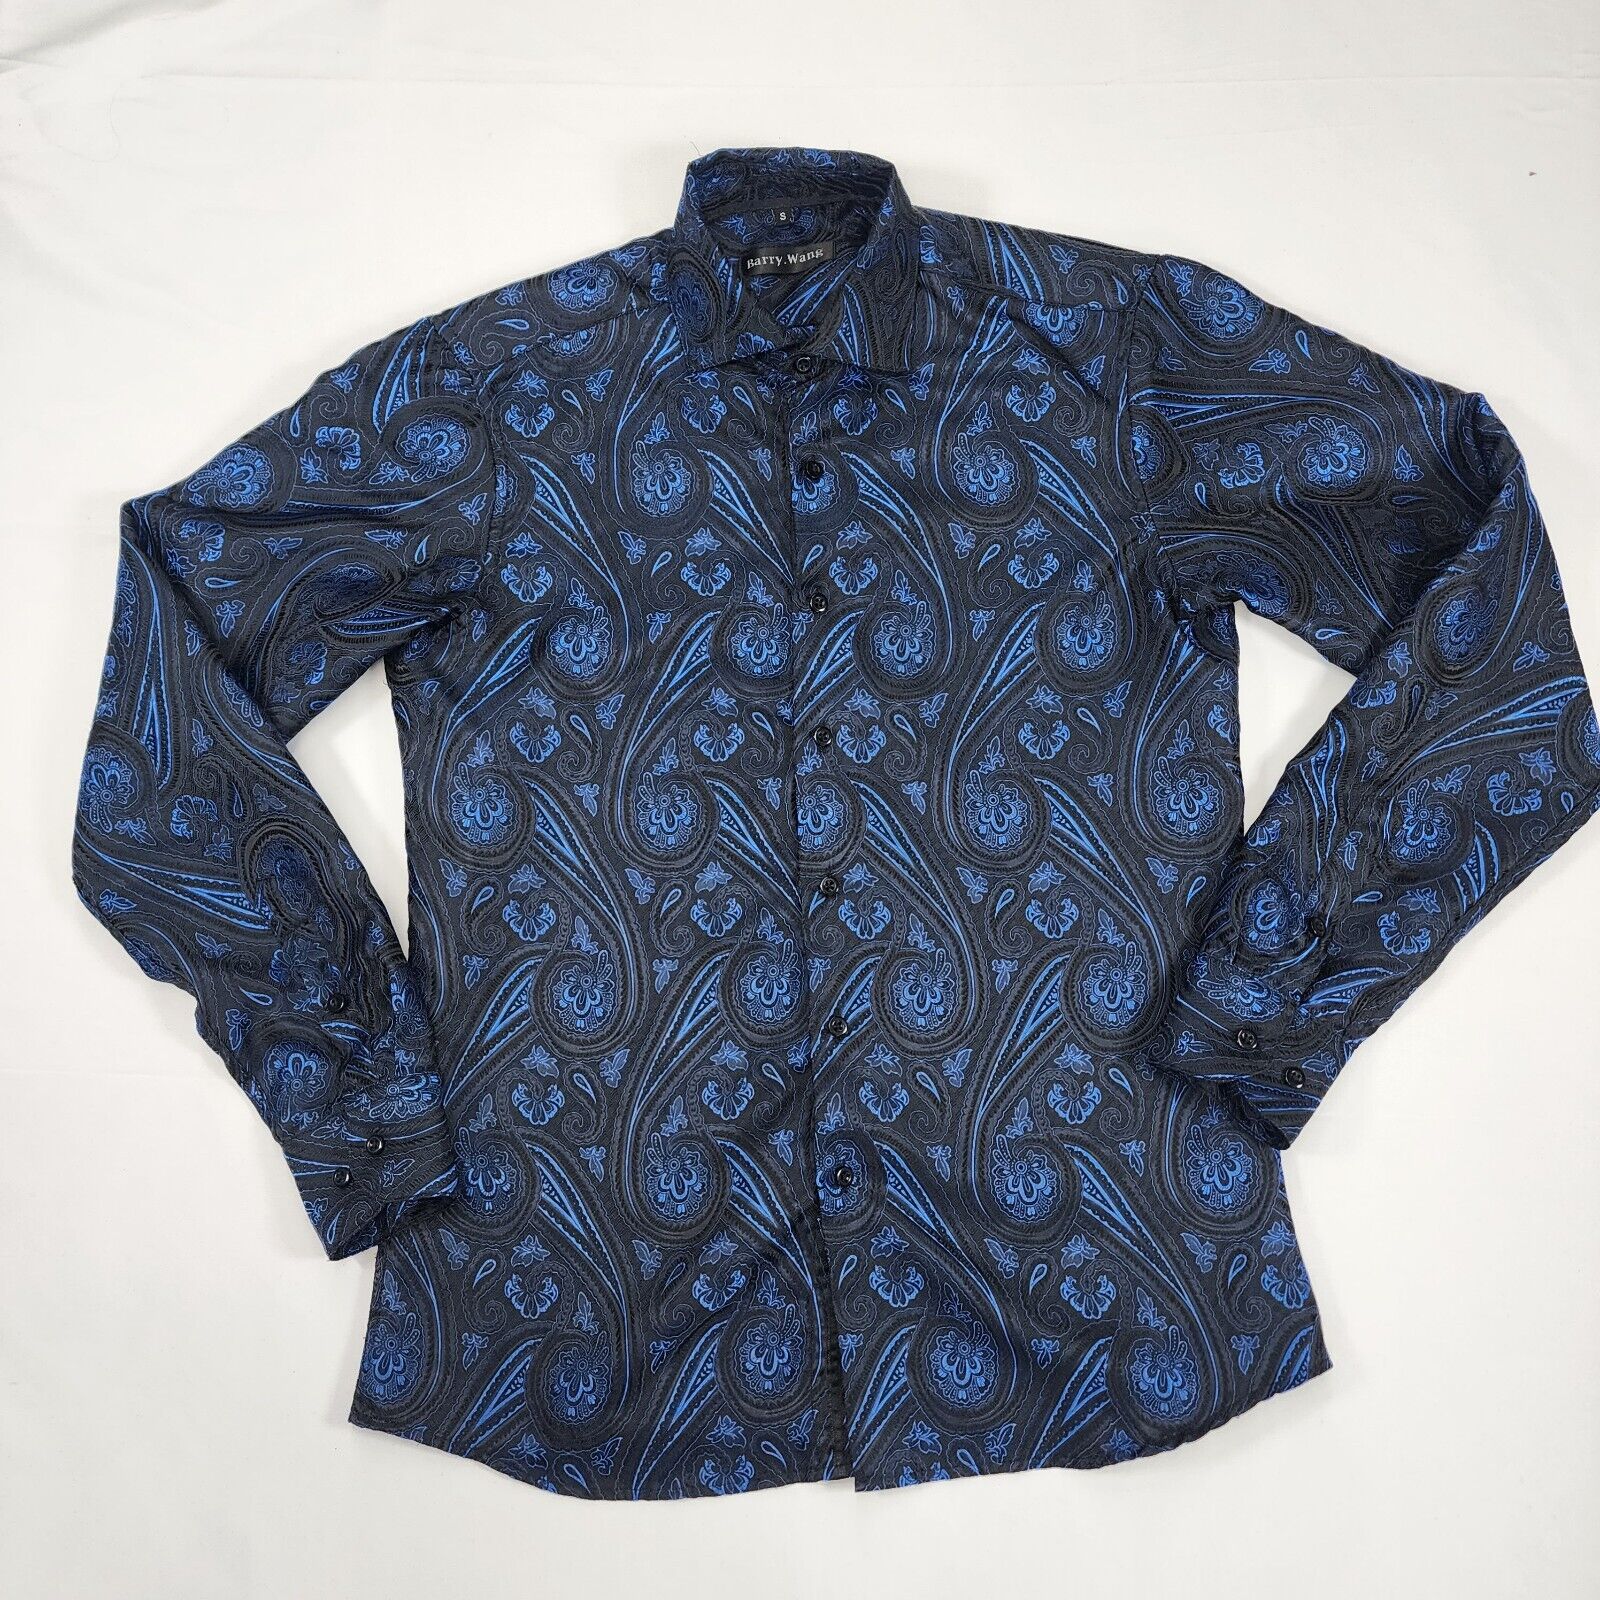 Barry.Wang Men\'s Black &Blue Paisley Flower Shirt Size S